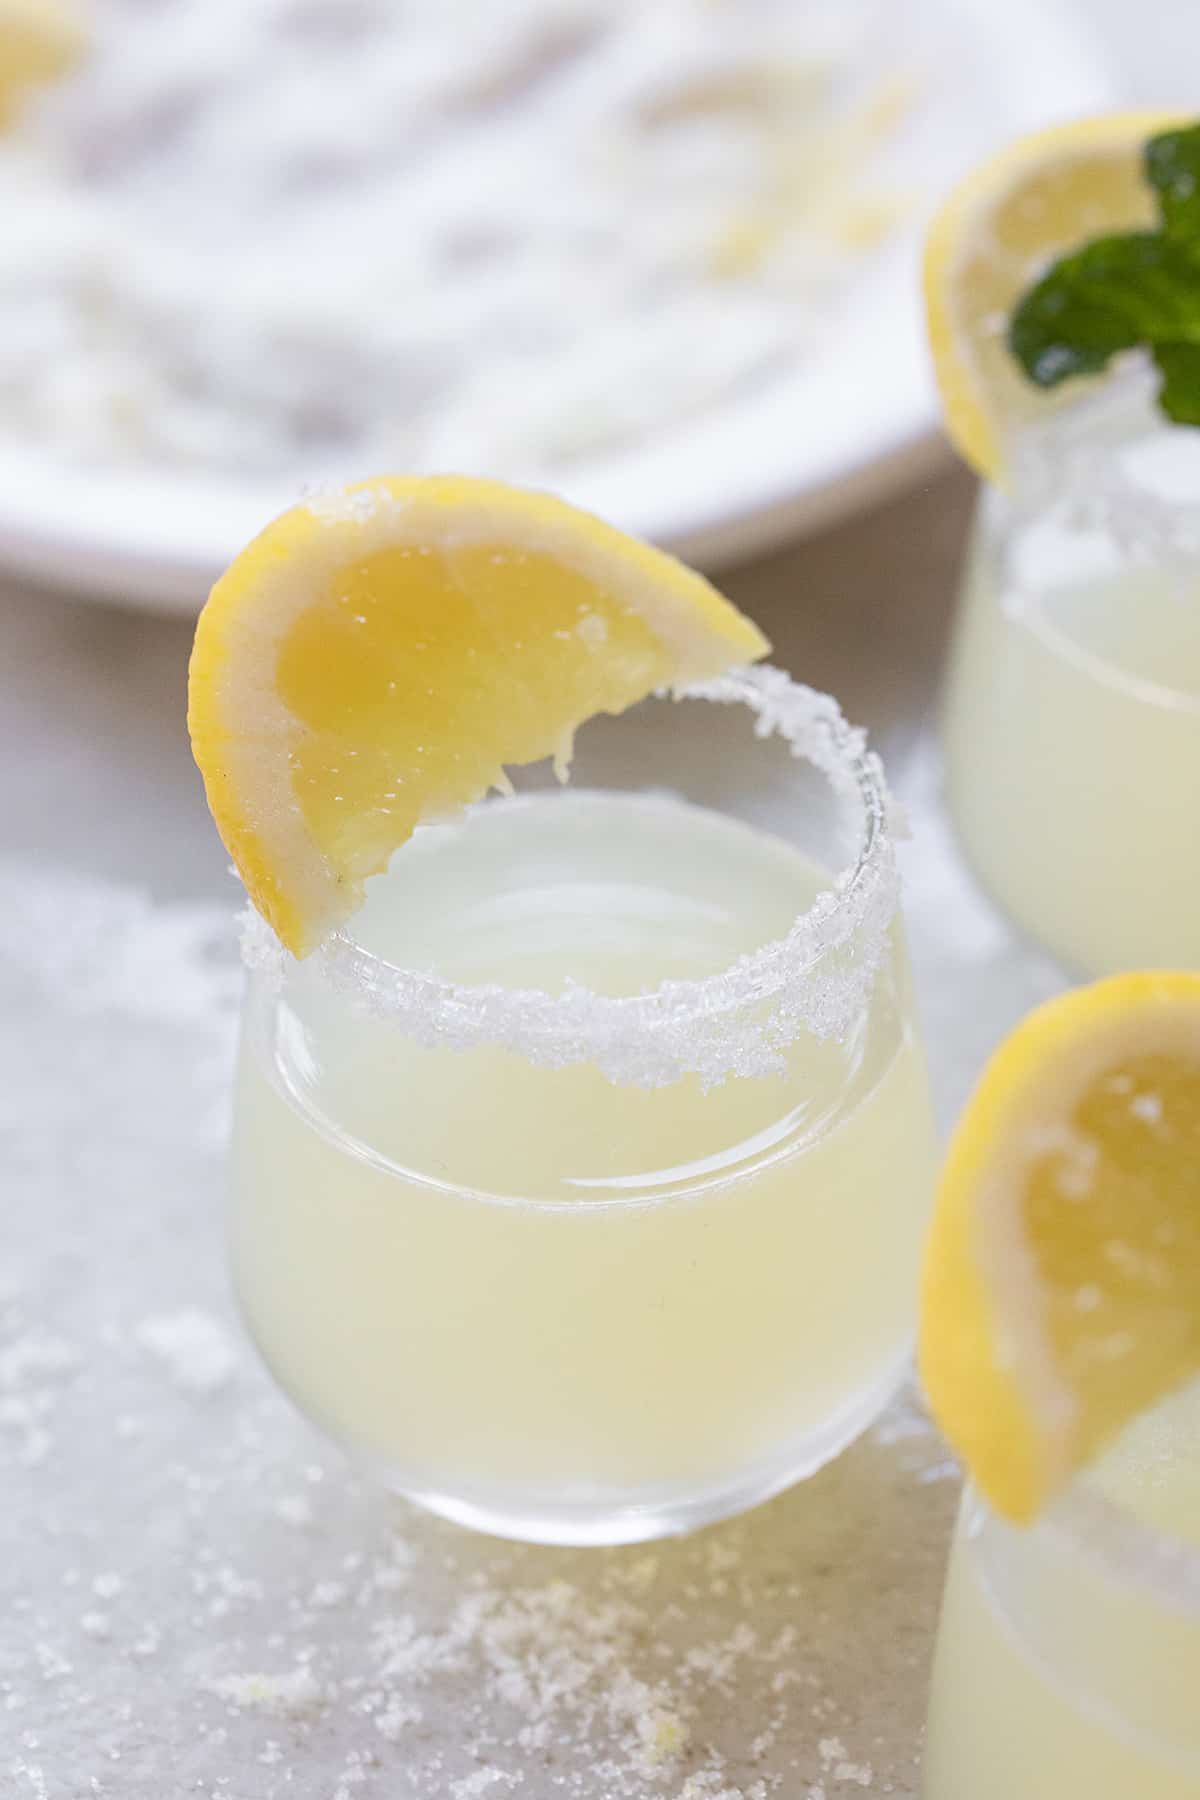 Lemon drop with a lemon slice.